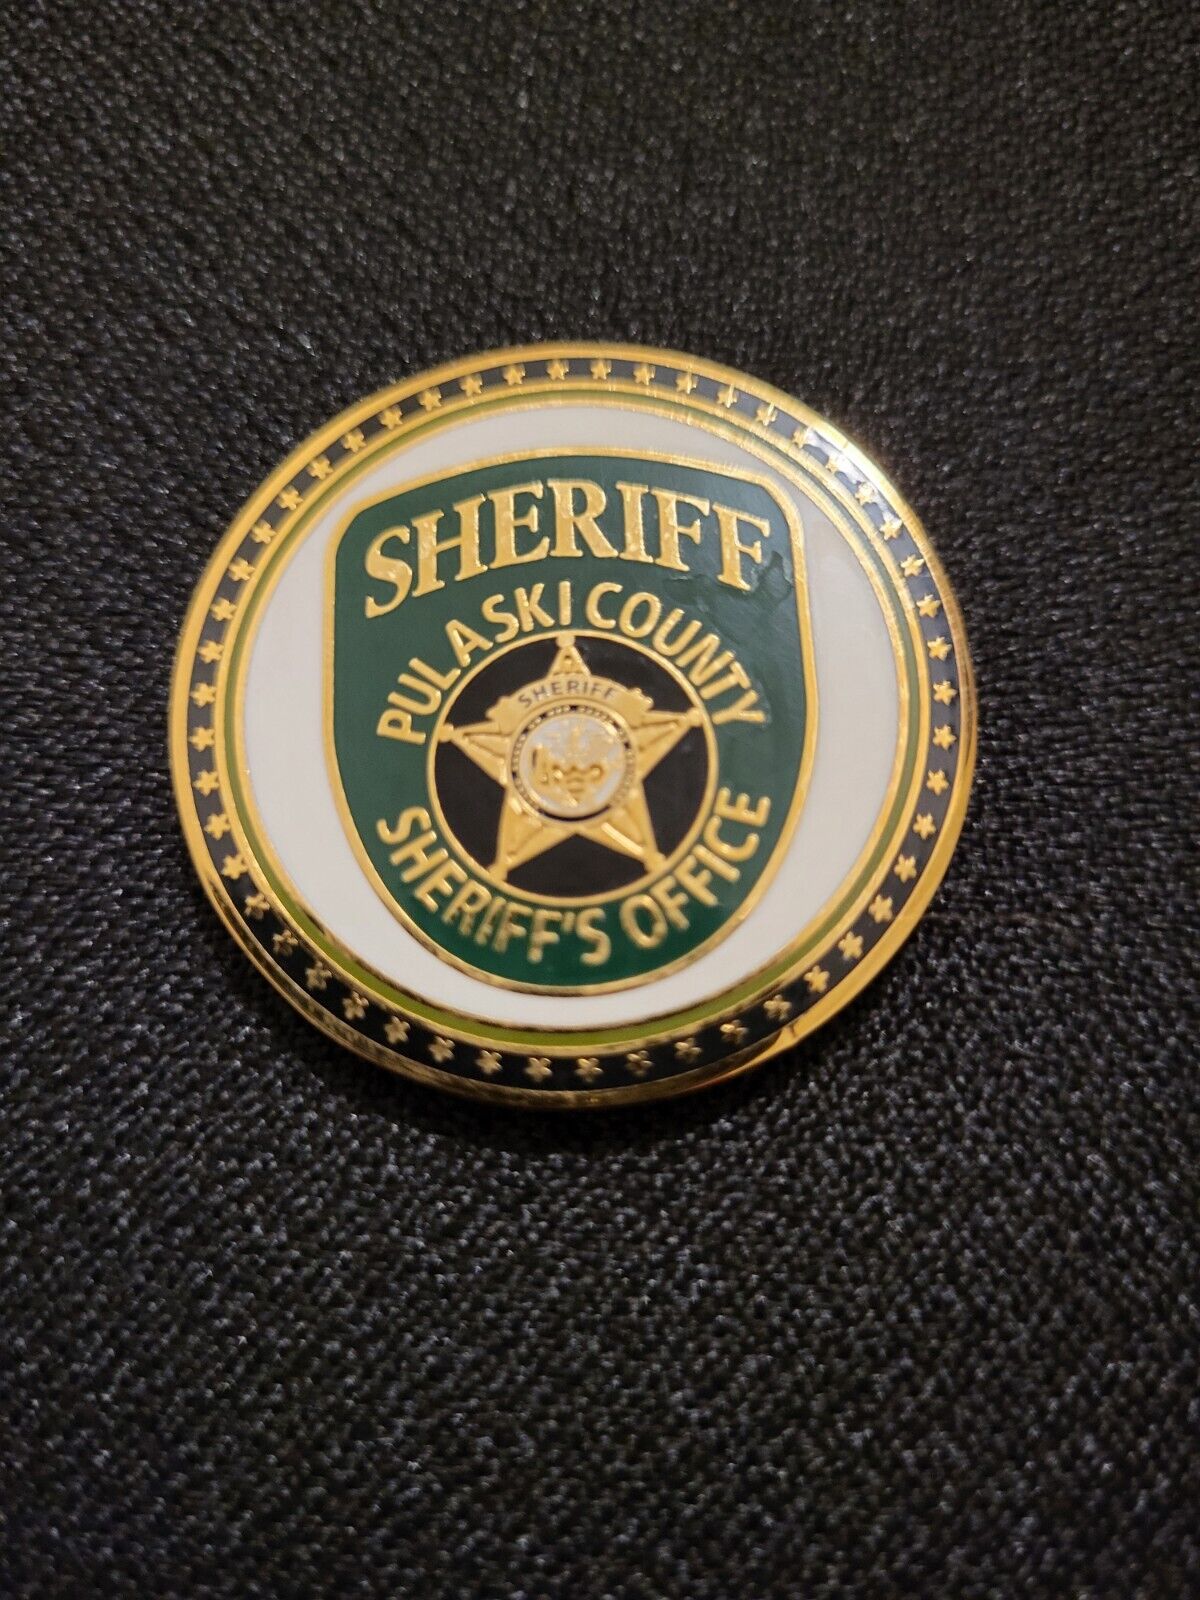 Arkansas State Pulaski County Sheriff Office / Department Challenge Coin 